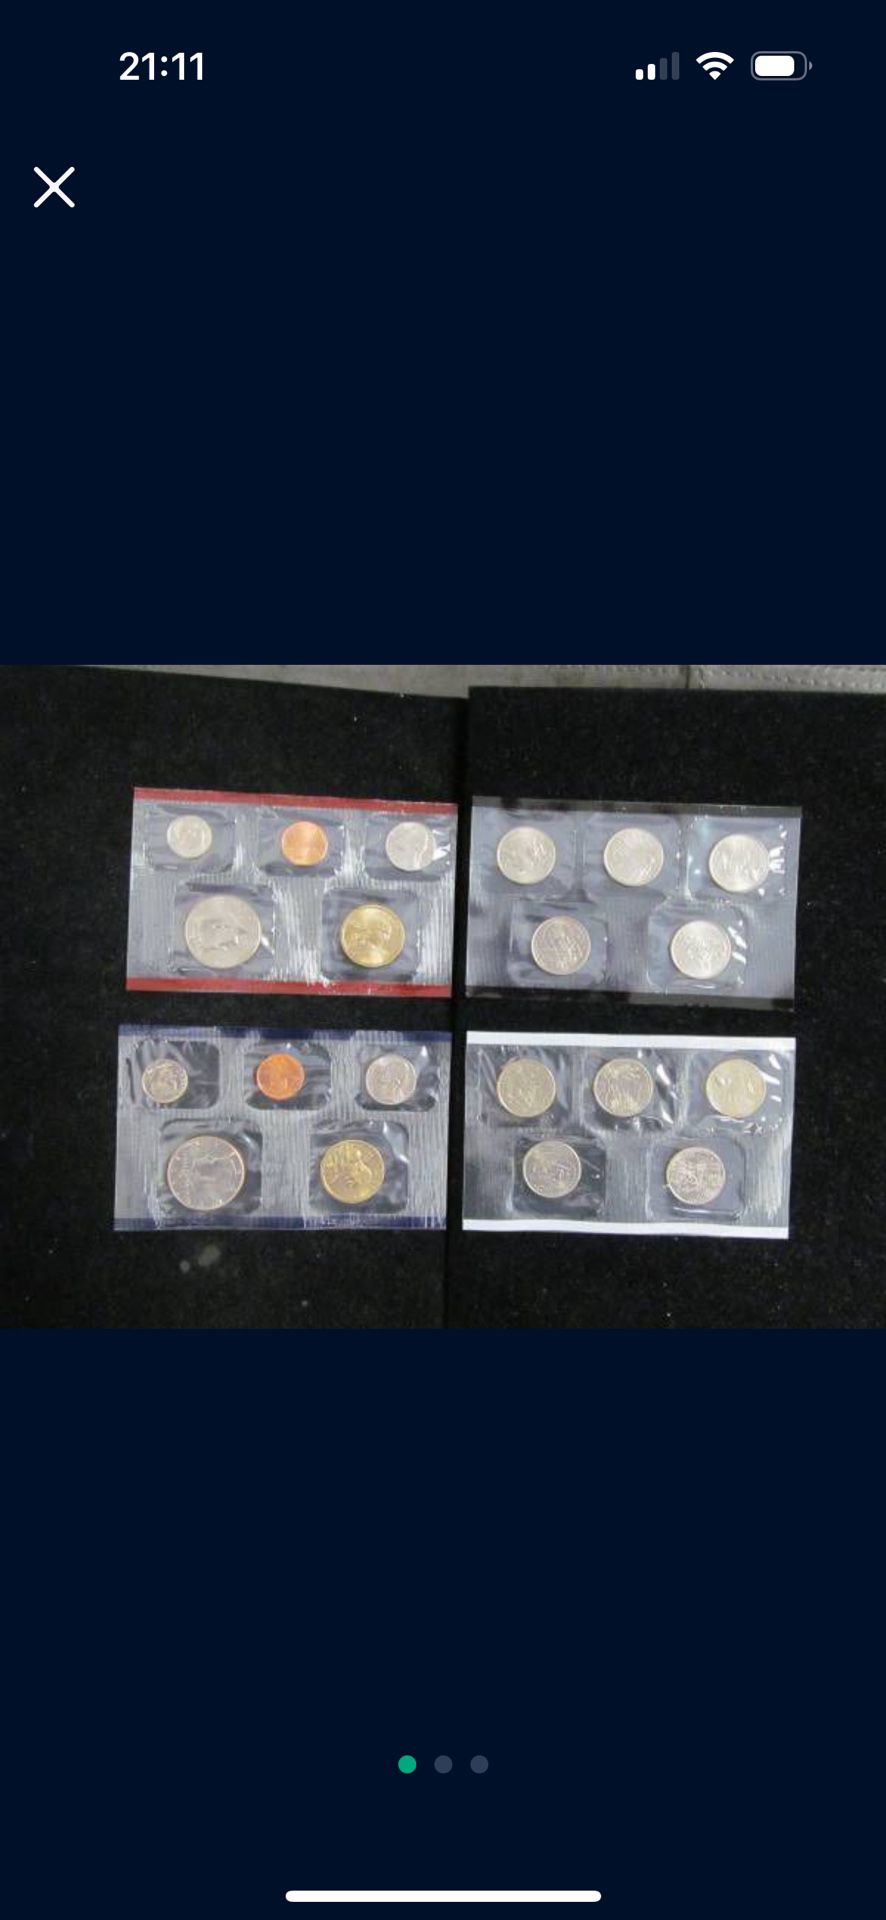 2002 U.S. Mint Set in OGP -- 20 TOTAL STELLAR COINS!